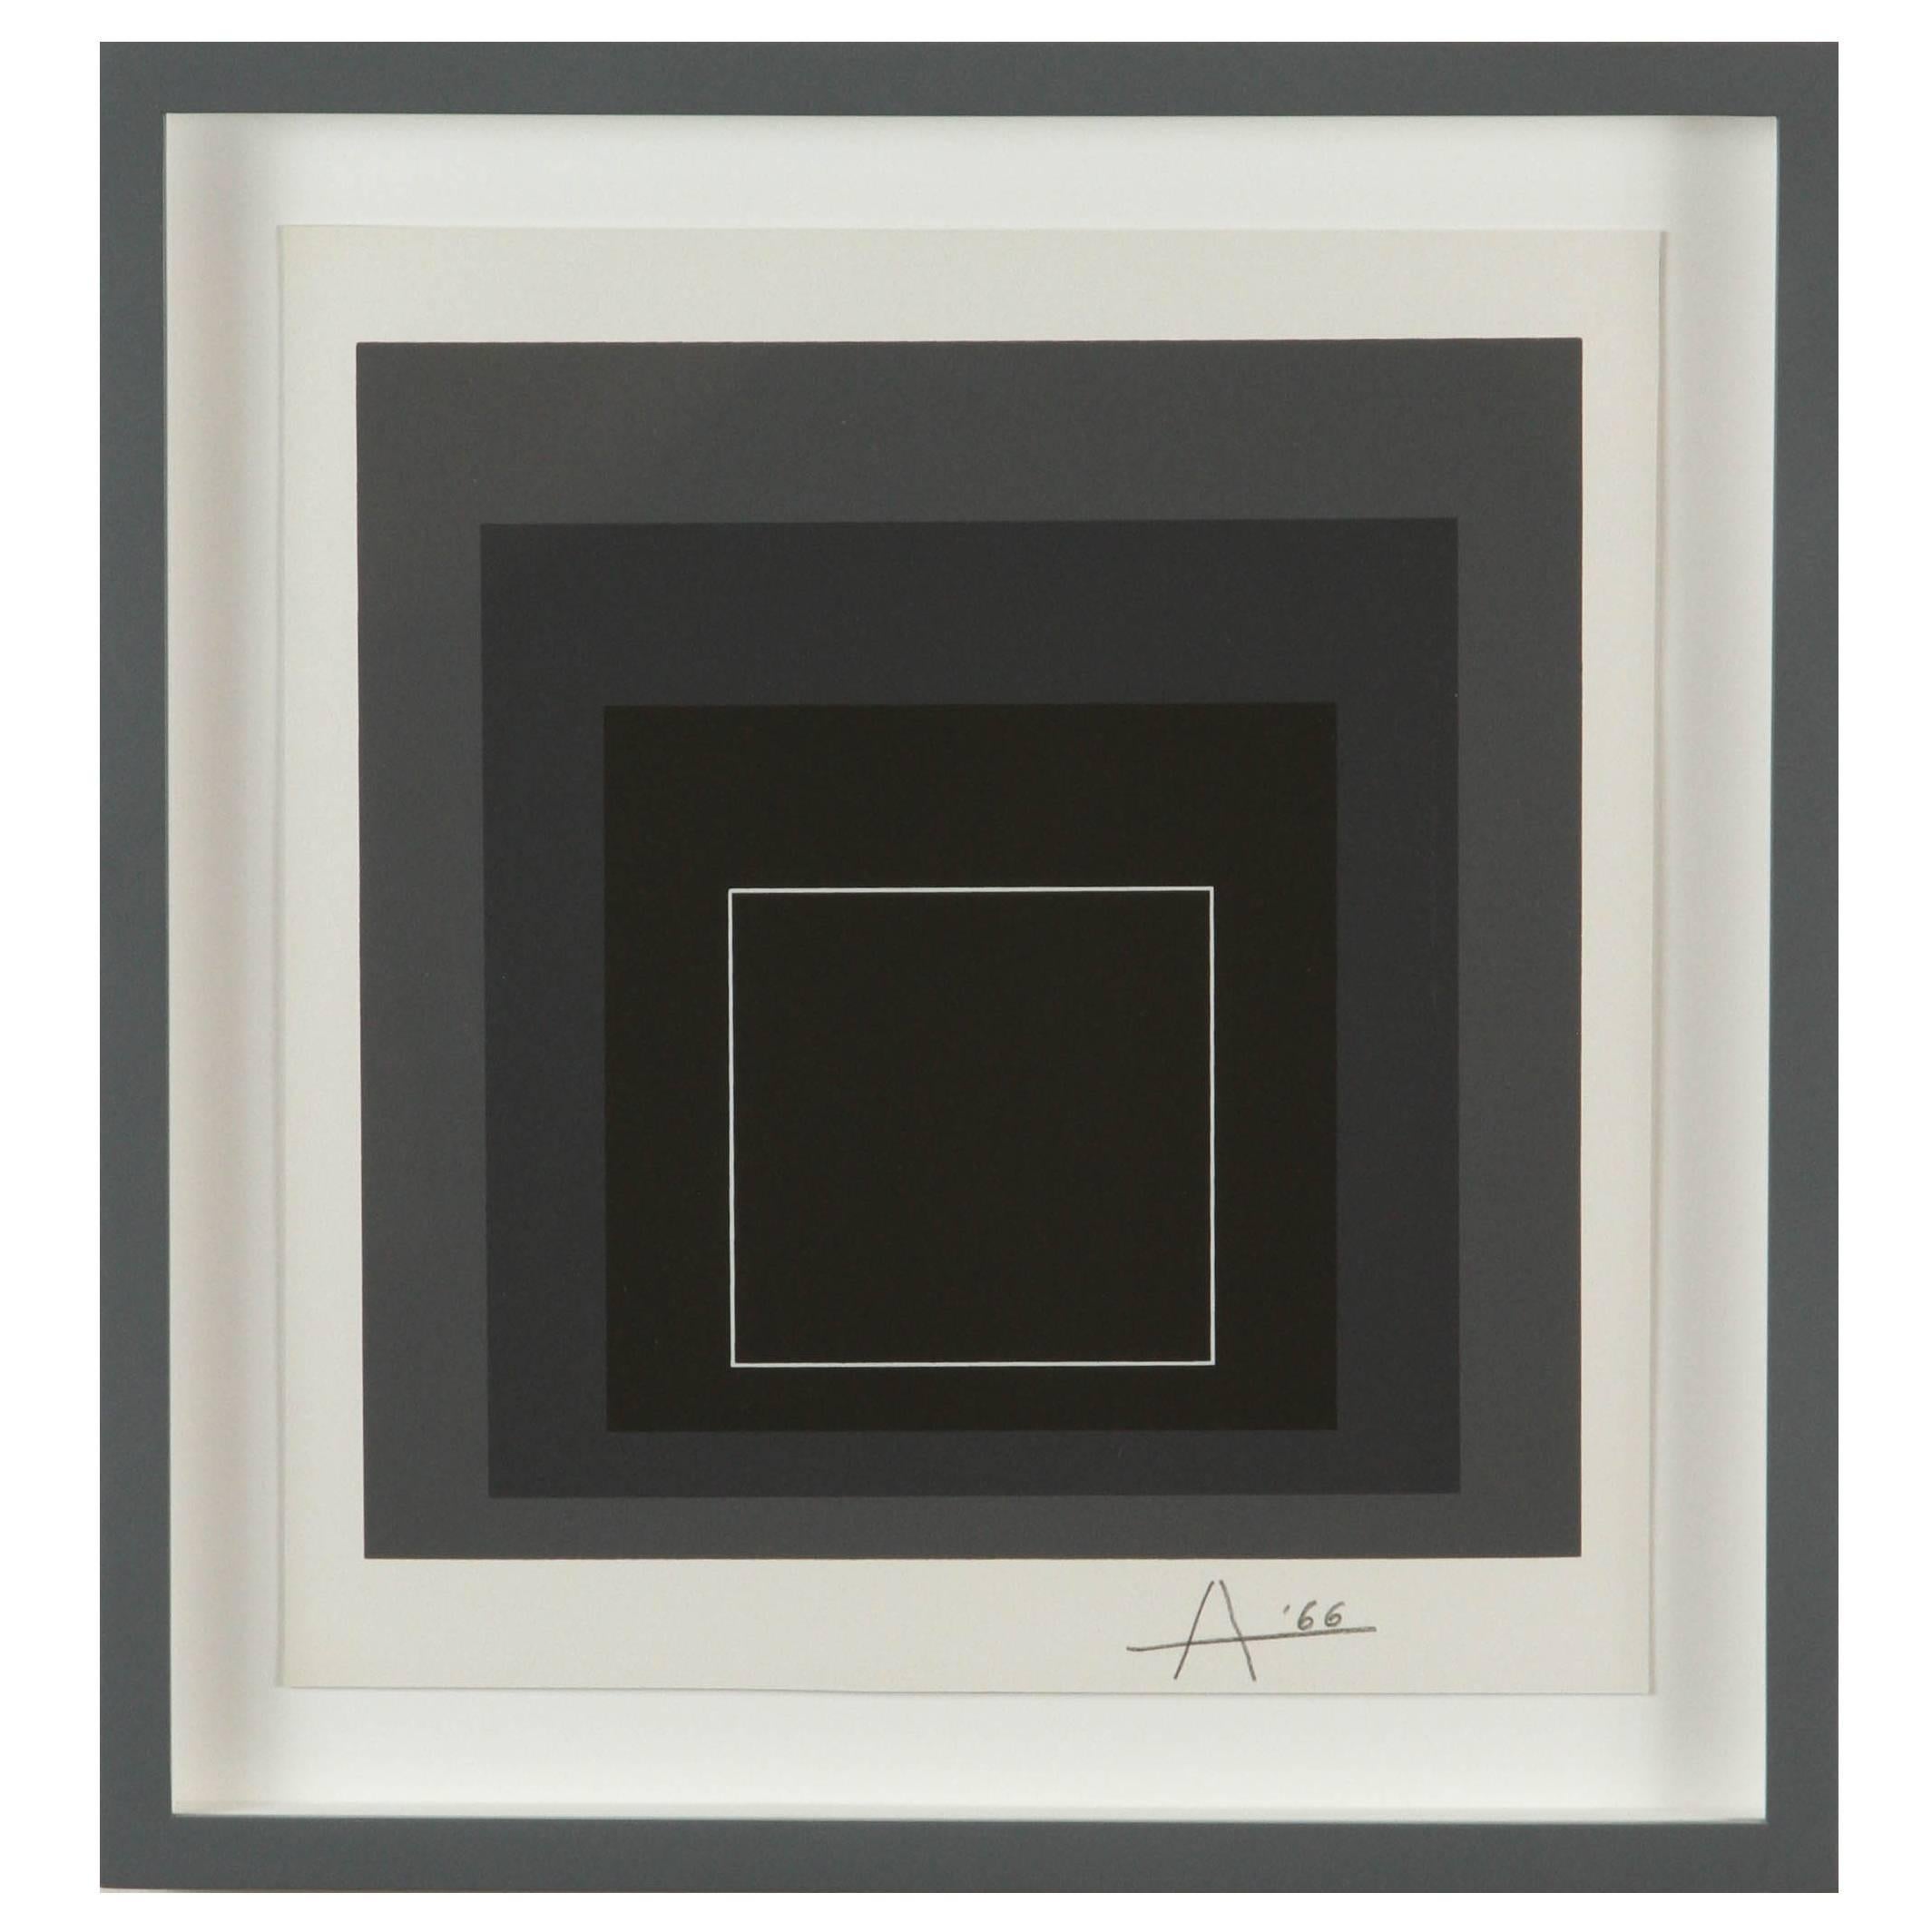 "White Line Square VIII" by Josef Albers